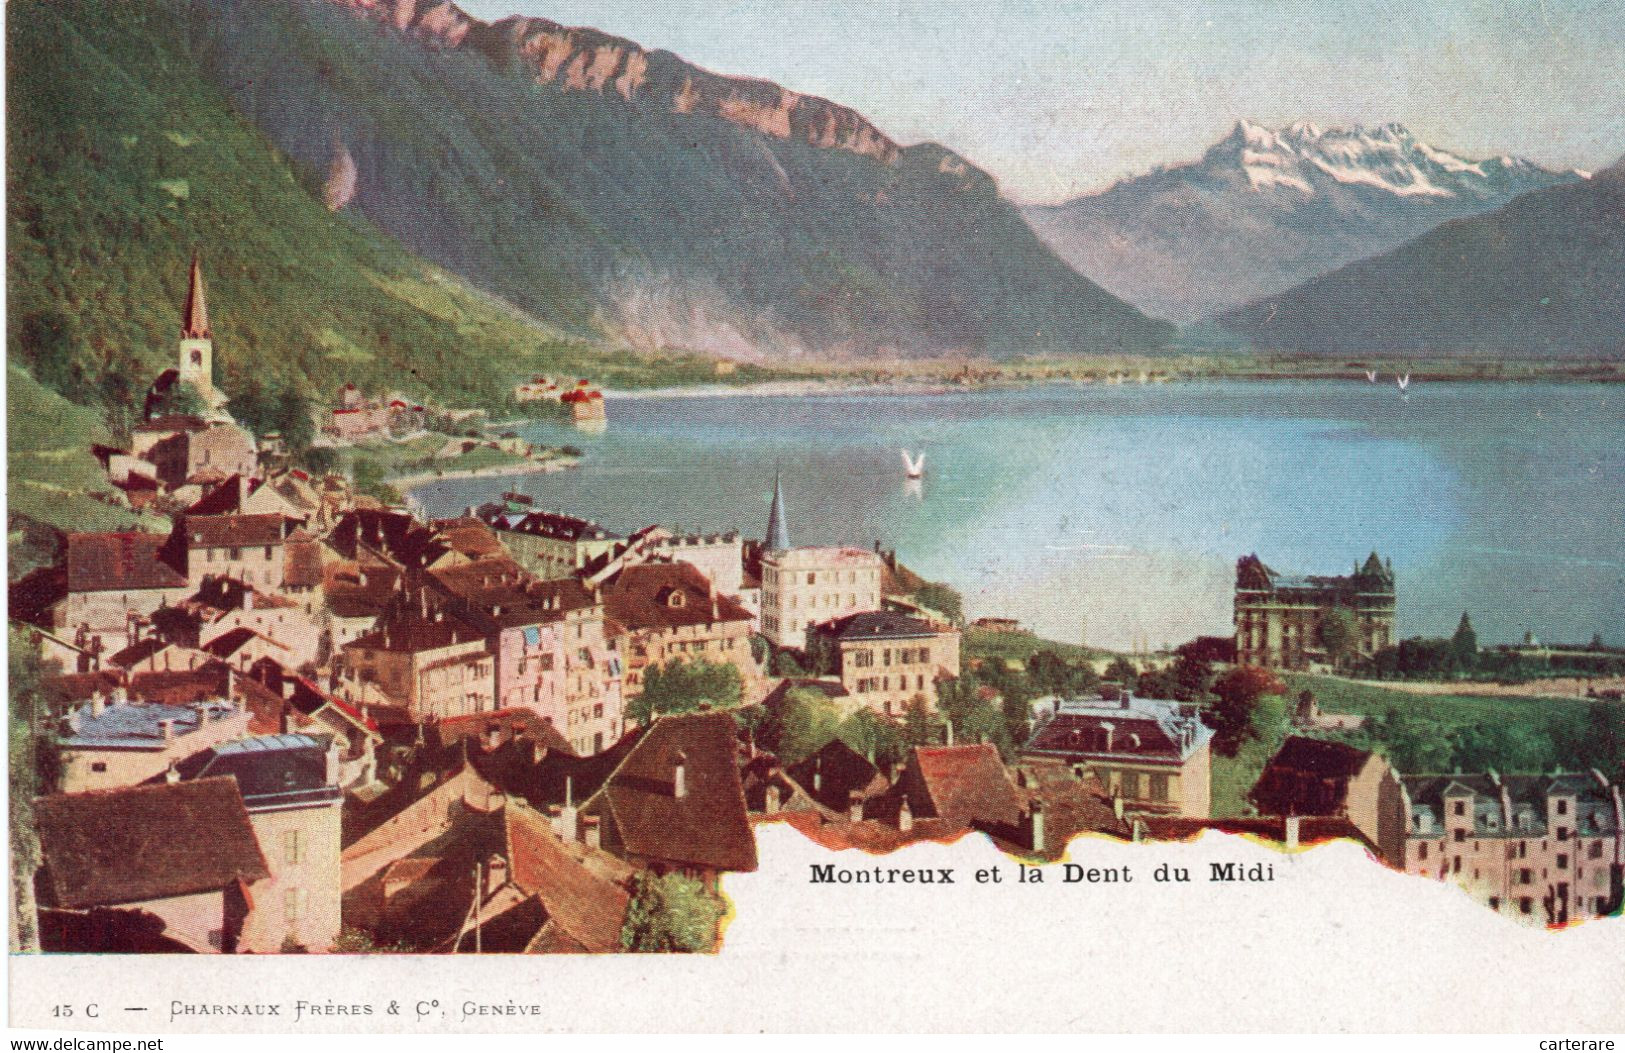 SUISSE,SWITZERLAND,SVIZZERA,SCHWEIZ,HELVETIA,SWISS,VAUD,MONTREUX,1900,RARE - Montreux